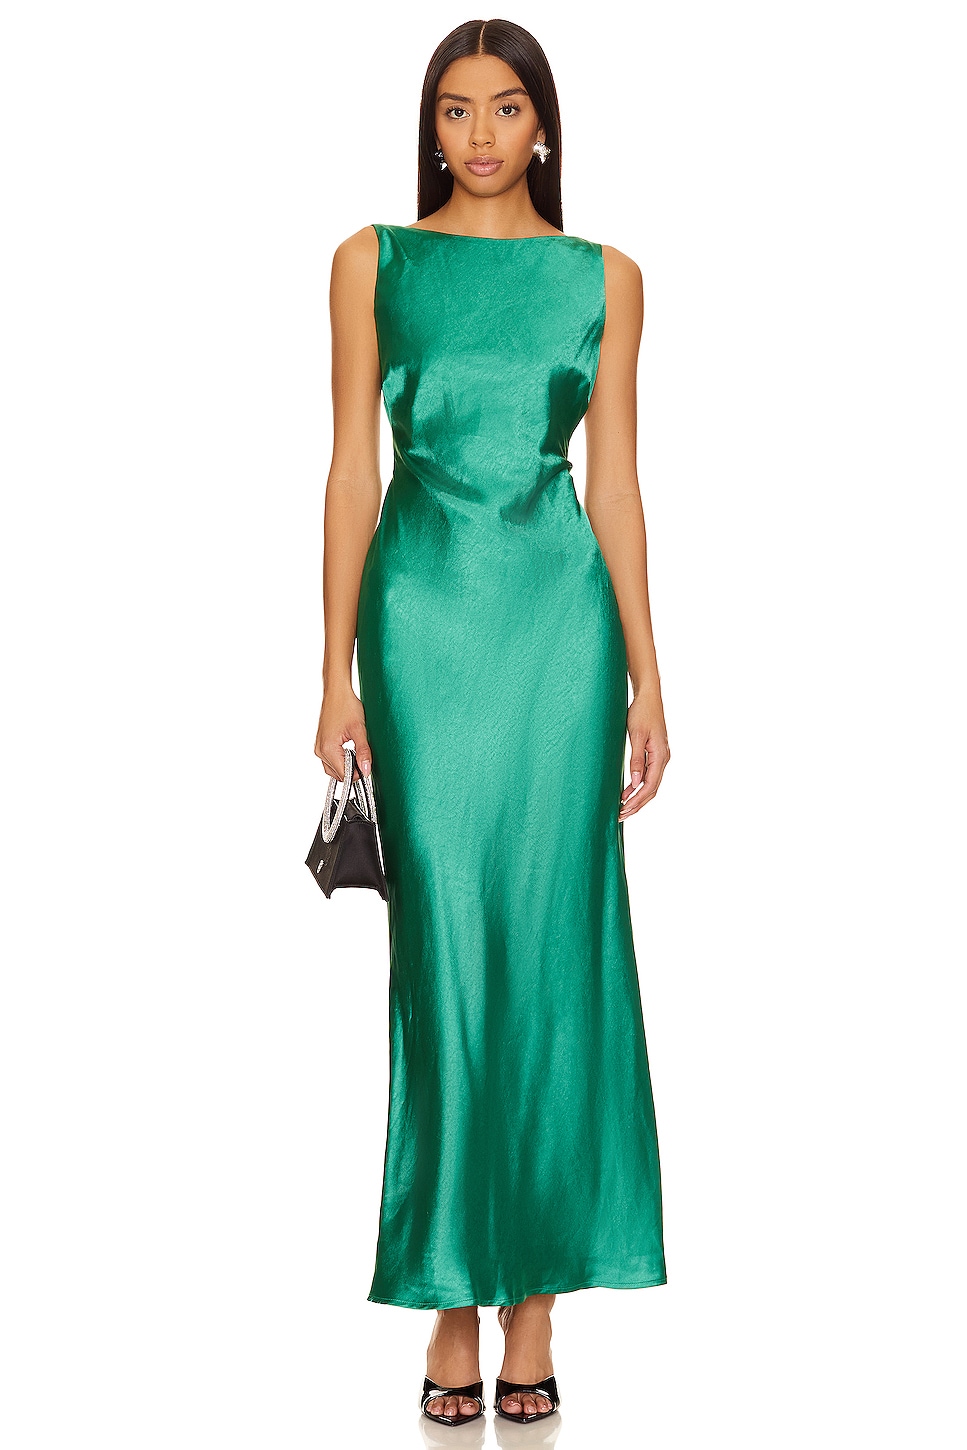 Runaway The Label Samsara Maxi Dress in Emerald | REVOLVE